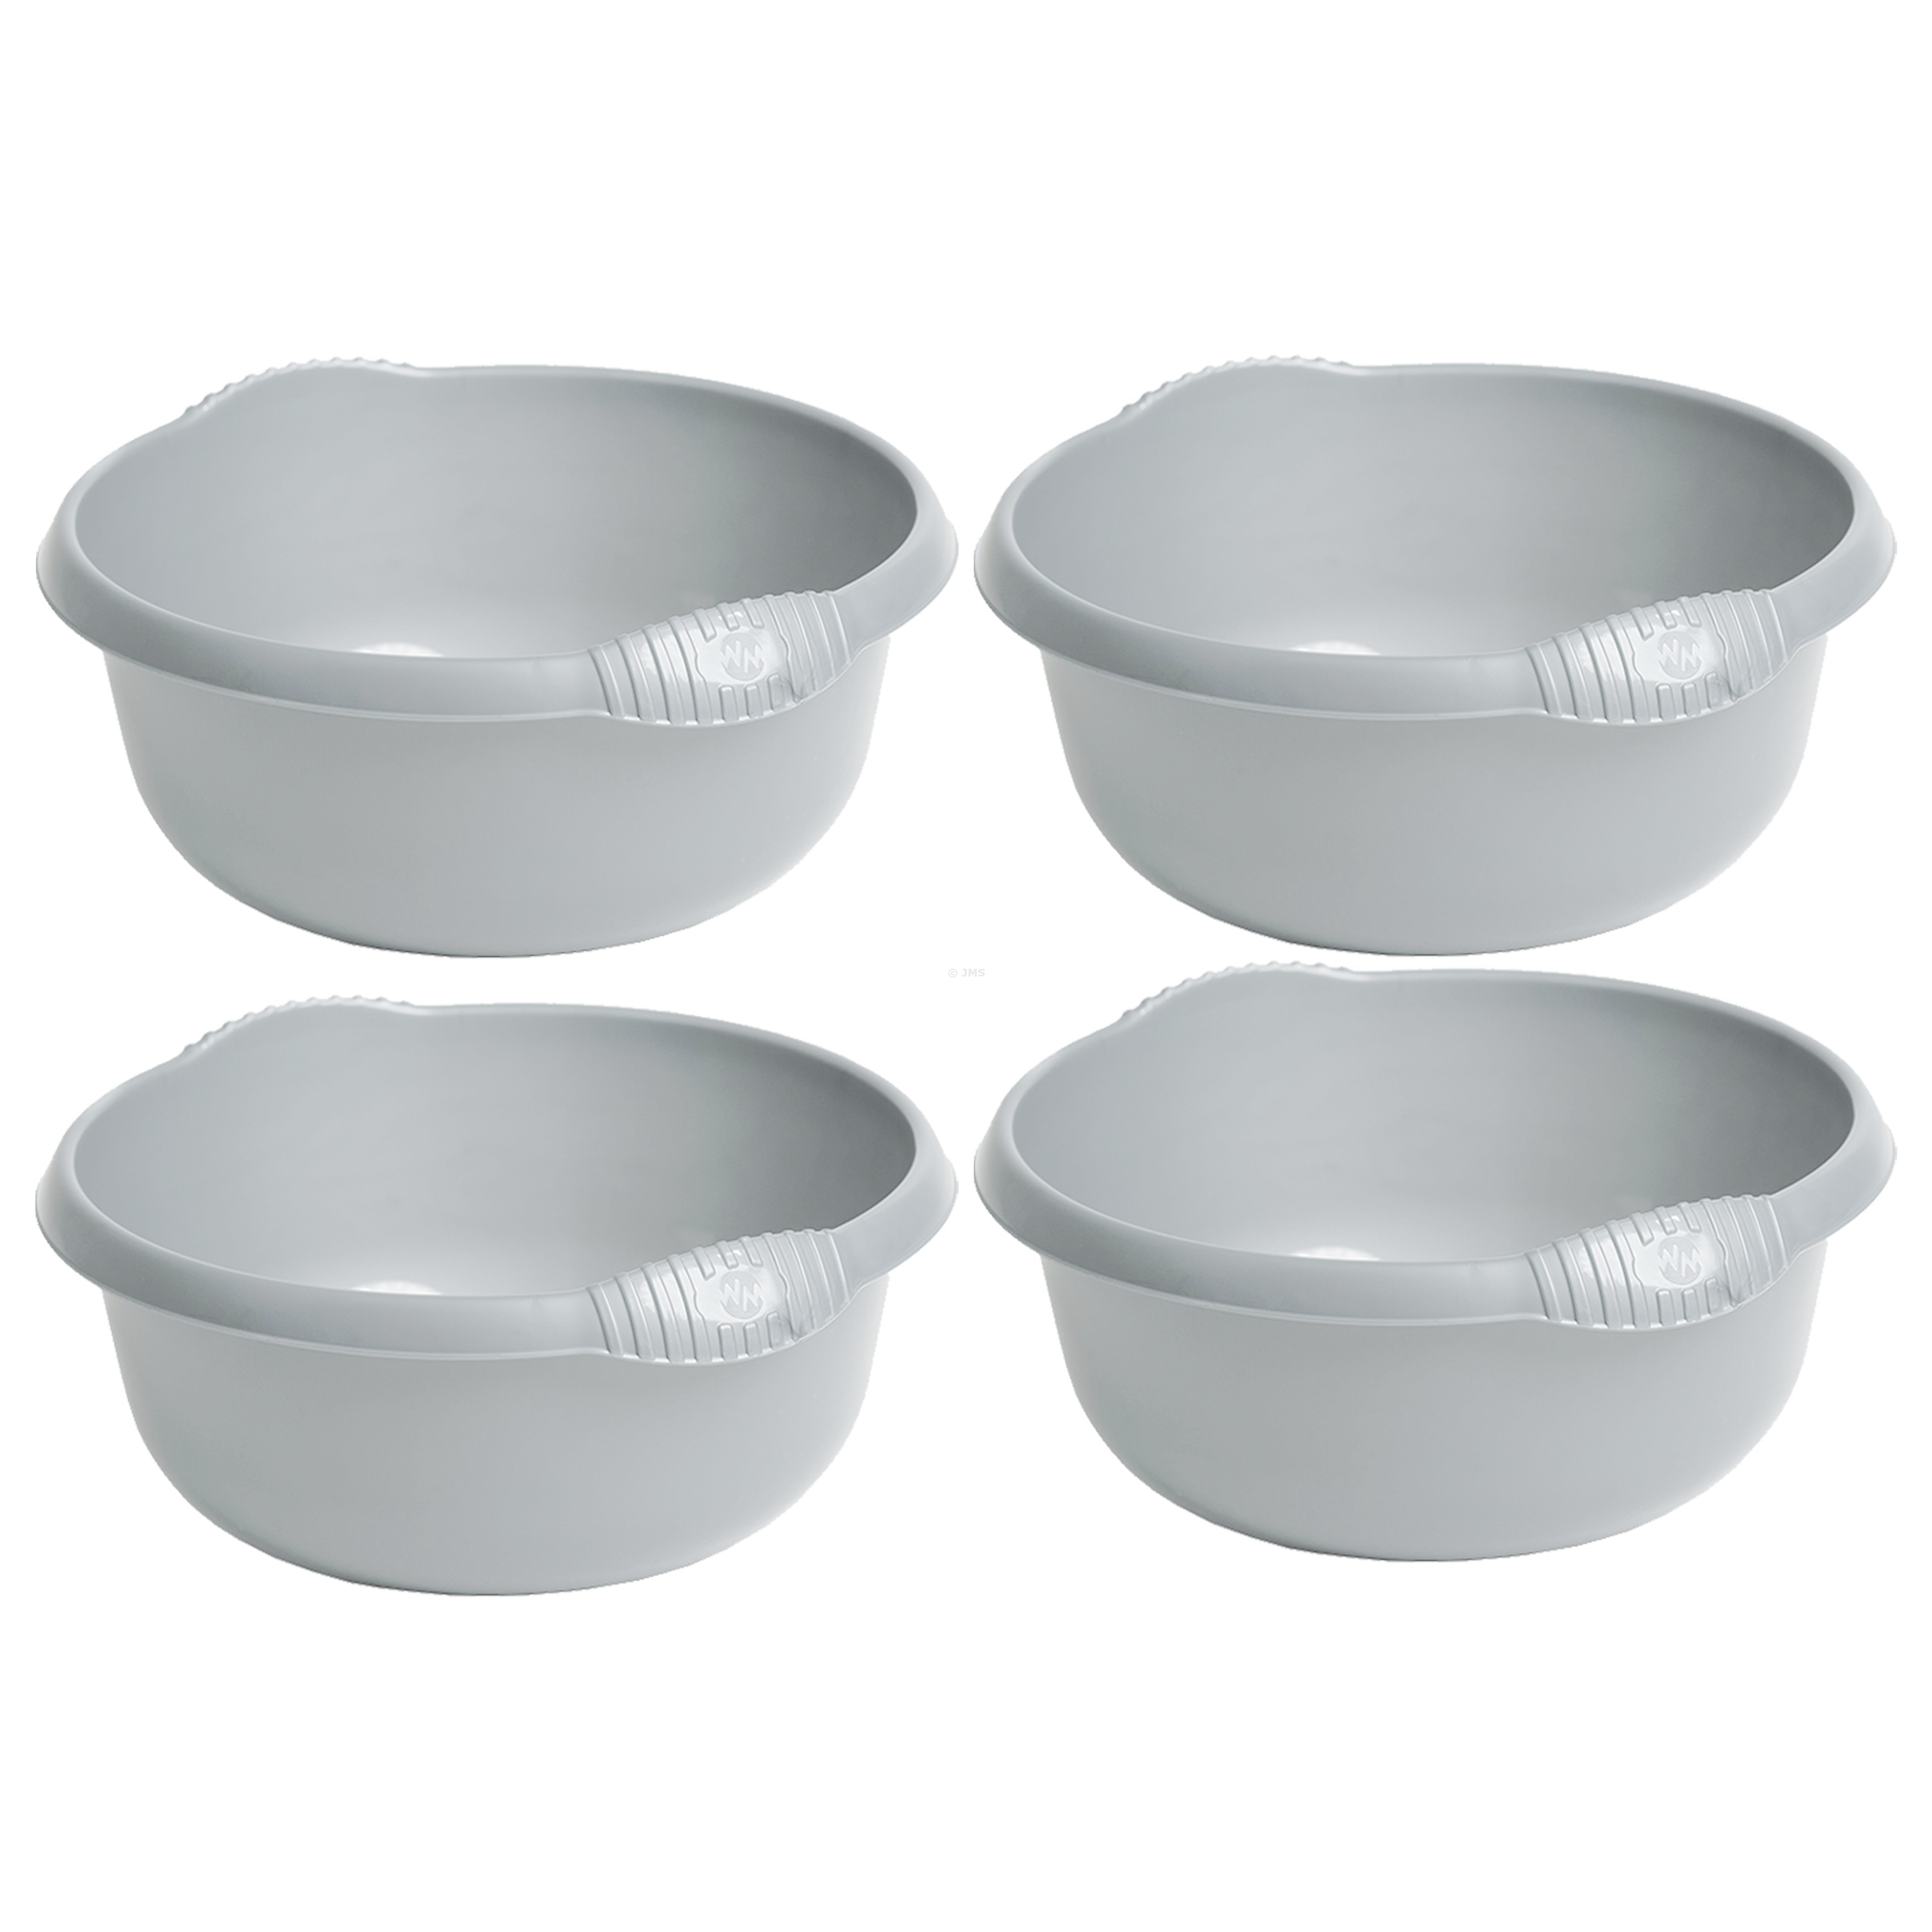 [Set of 4] 32cm Washing Up Round Bowl Silver 7L Capacity Integral Handles Home Kitchen Sink Basin